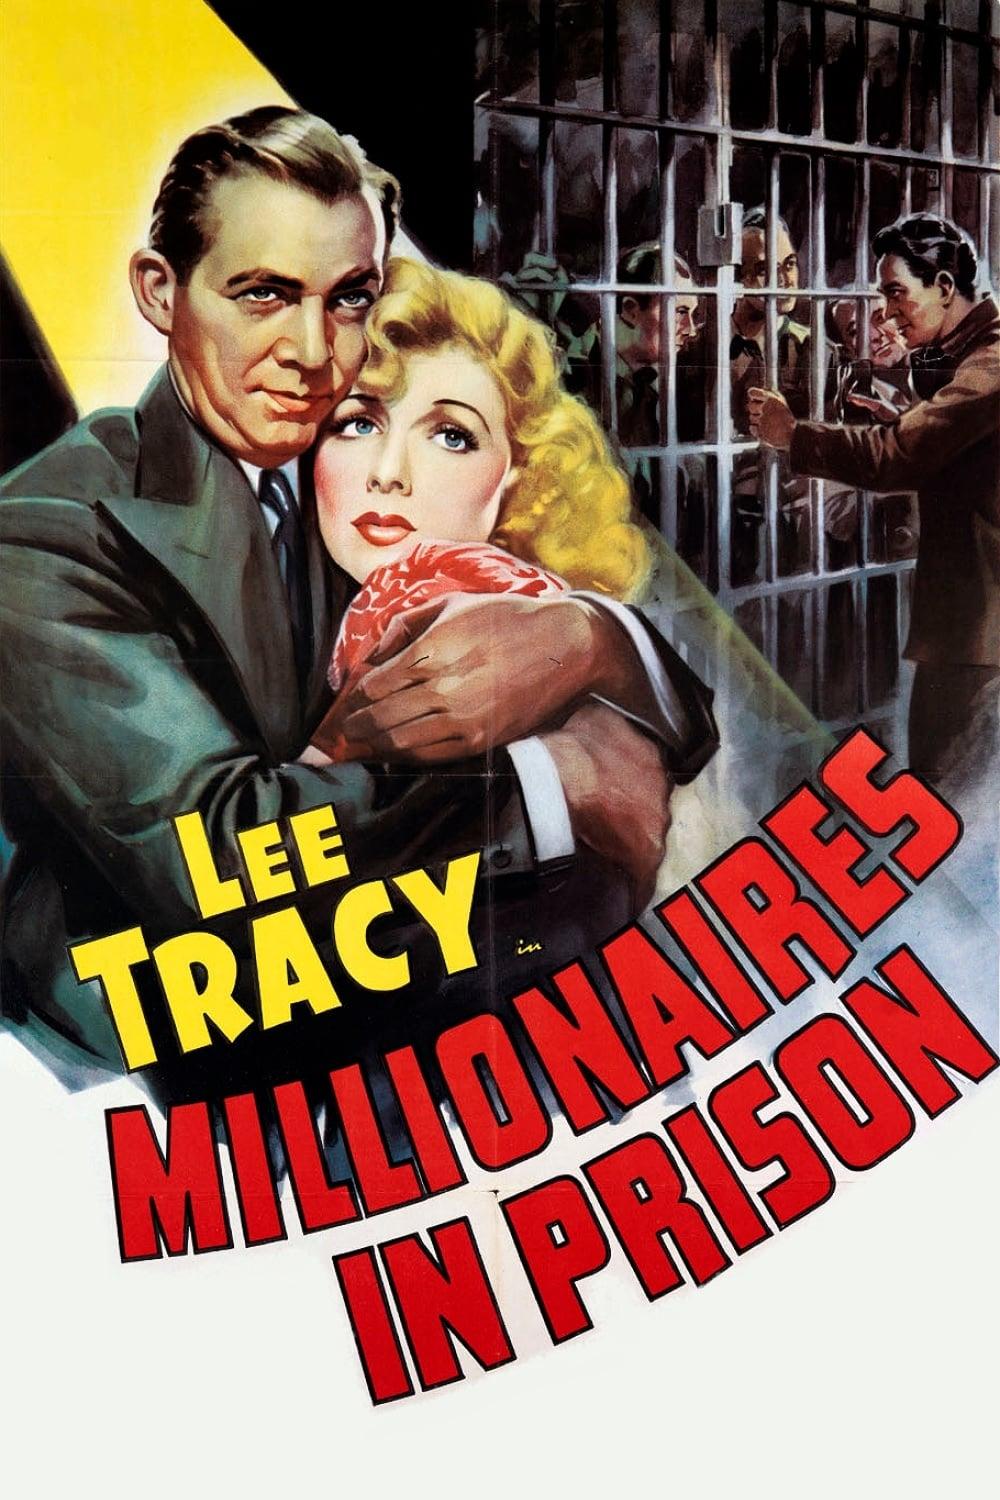 Millionaires in Prison poster